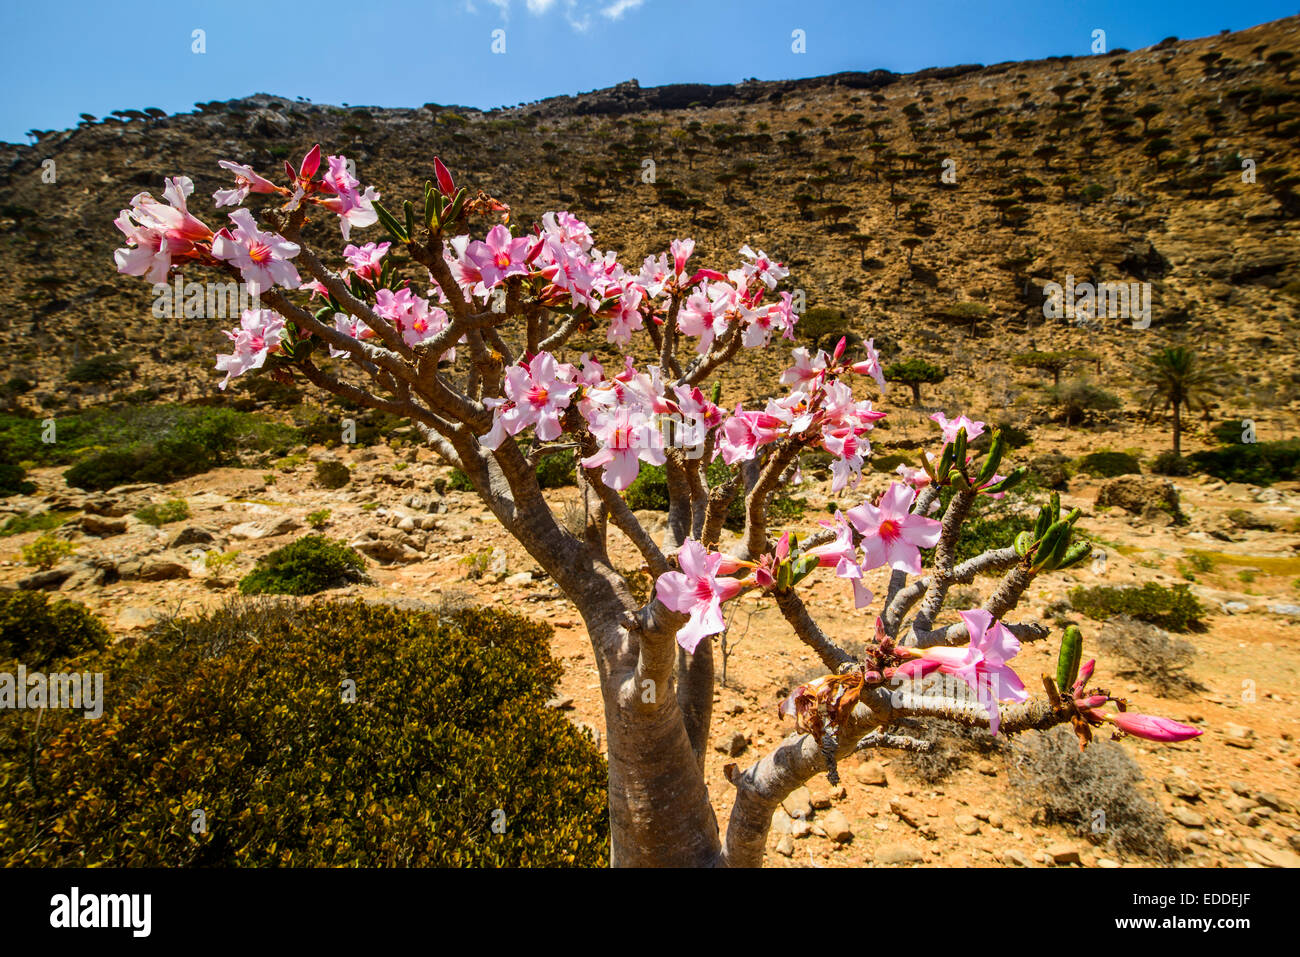 Desert Rose tree (Adenium obesum) in bloom, endemic species, Homhil protected area, island of Socotra, Yemen Stock Photo